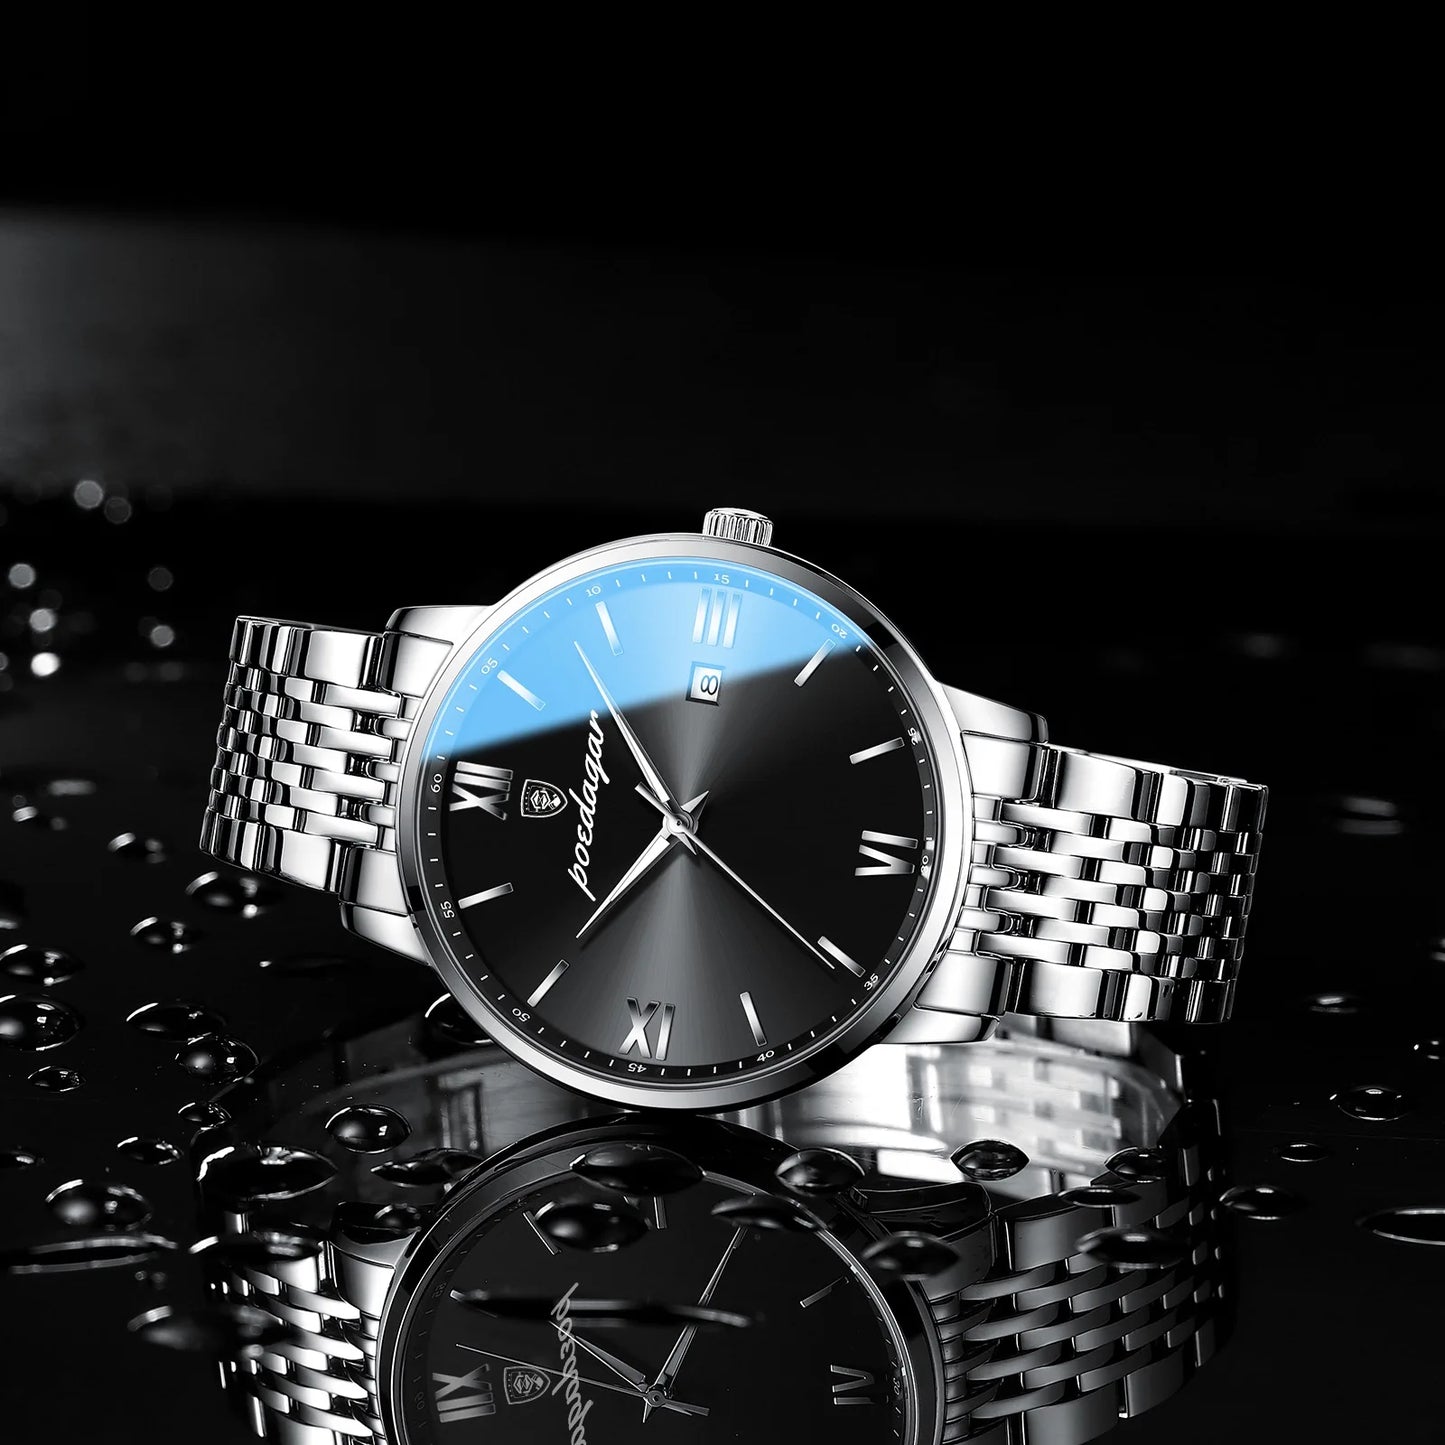 Watch Men Stainless Steel Business Date Clock Waterproof Luminous Watches Mens Luxury Sport Quartz Wristwatch